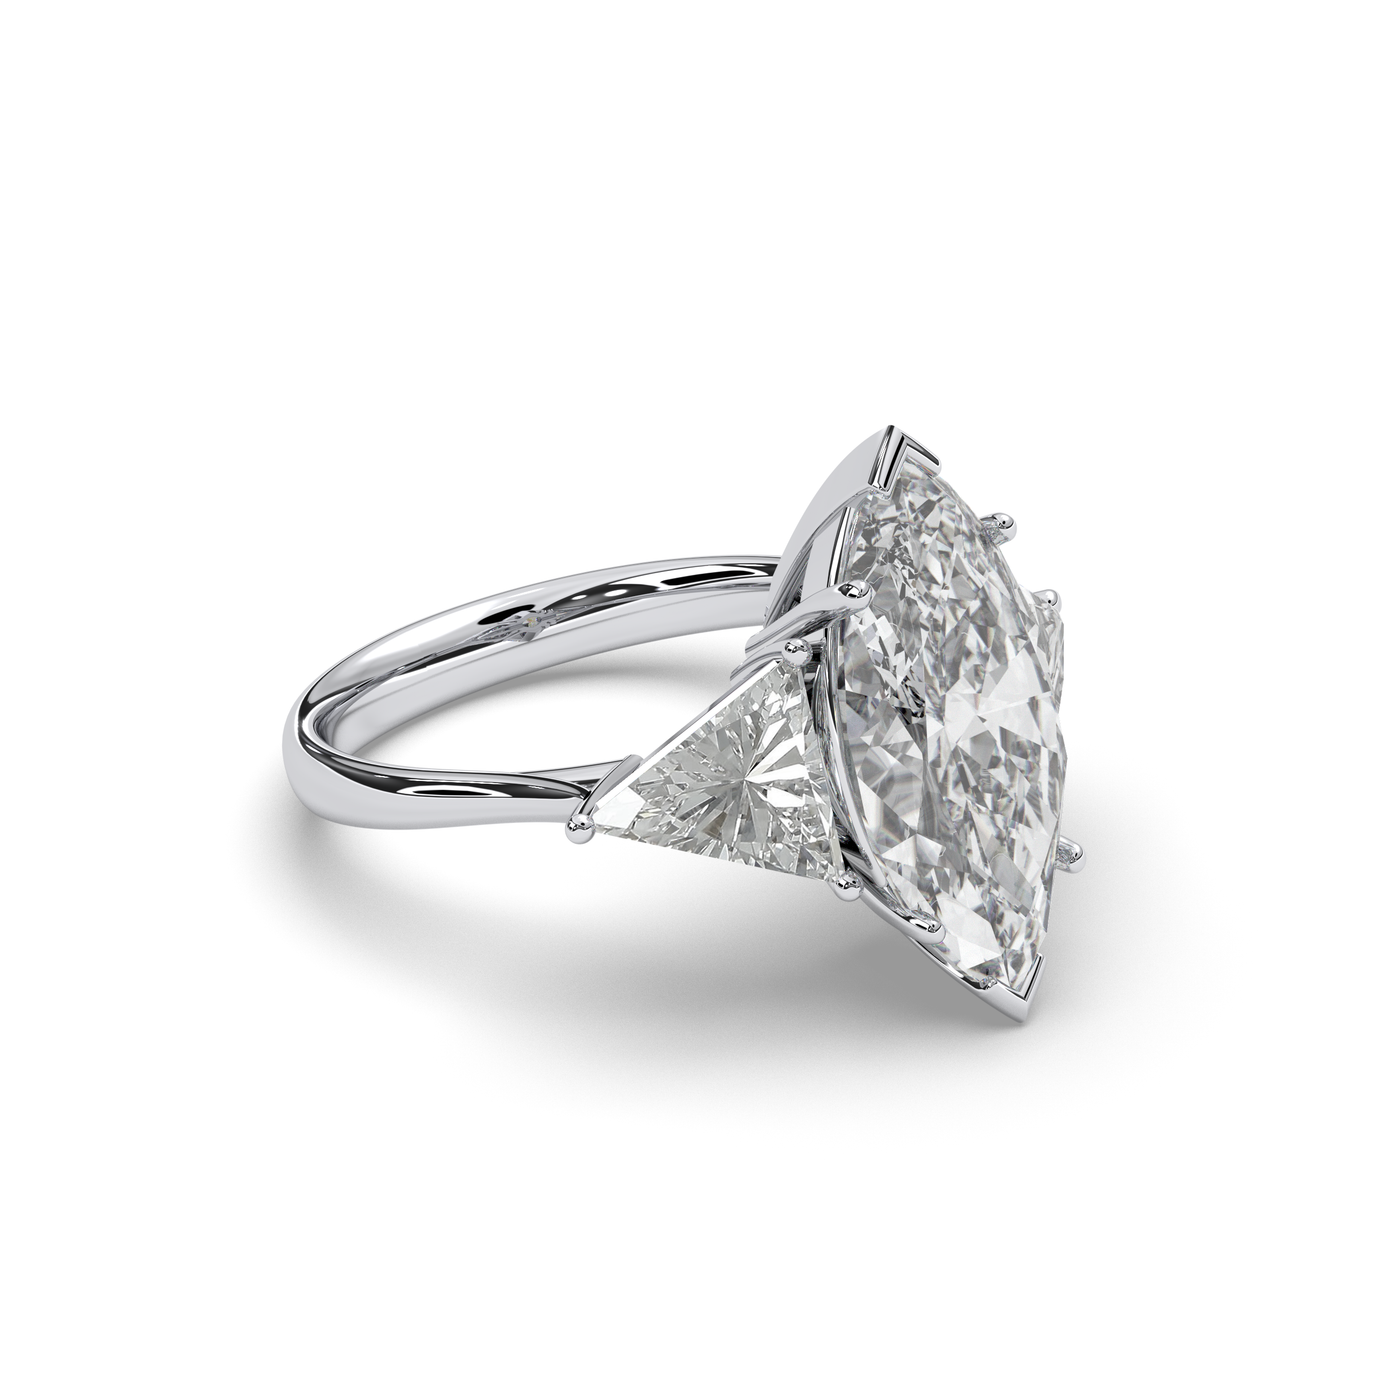 SB Classic Diamond Solitaire ring marquise cut